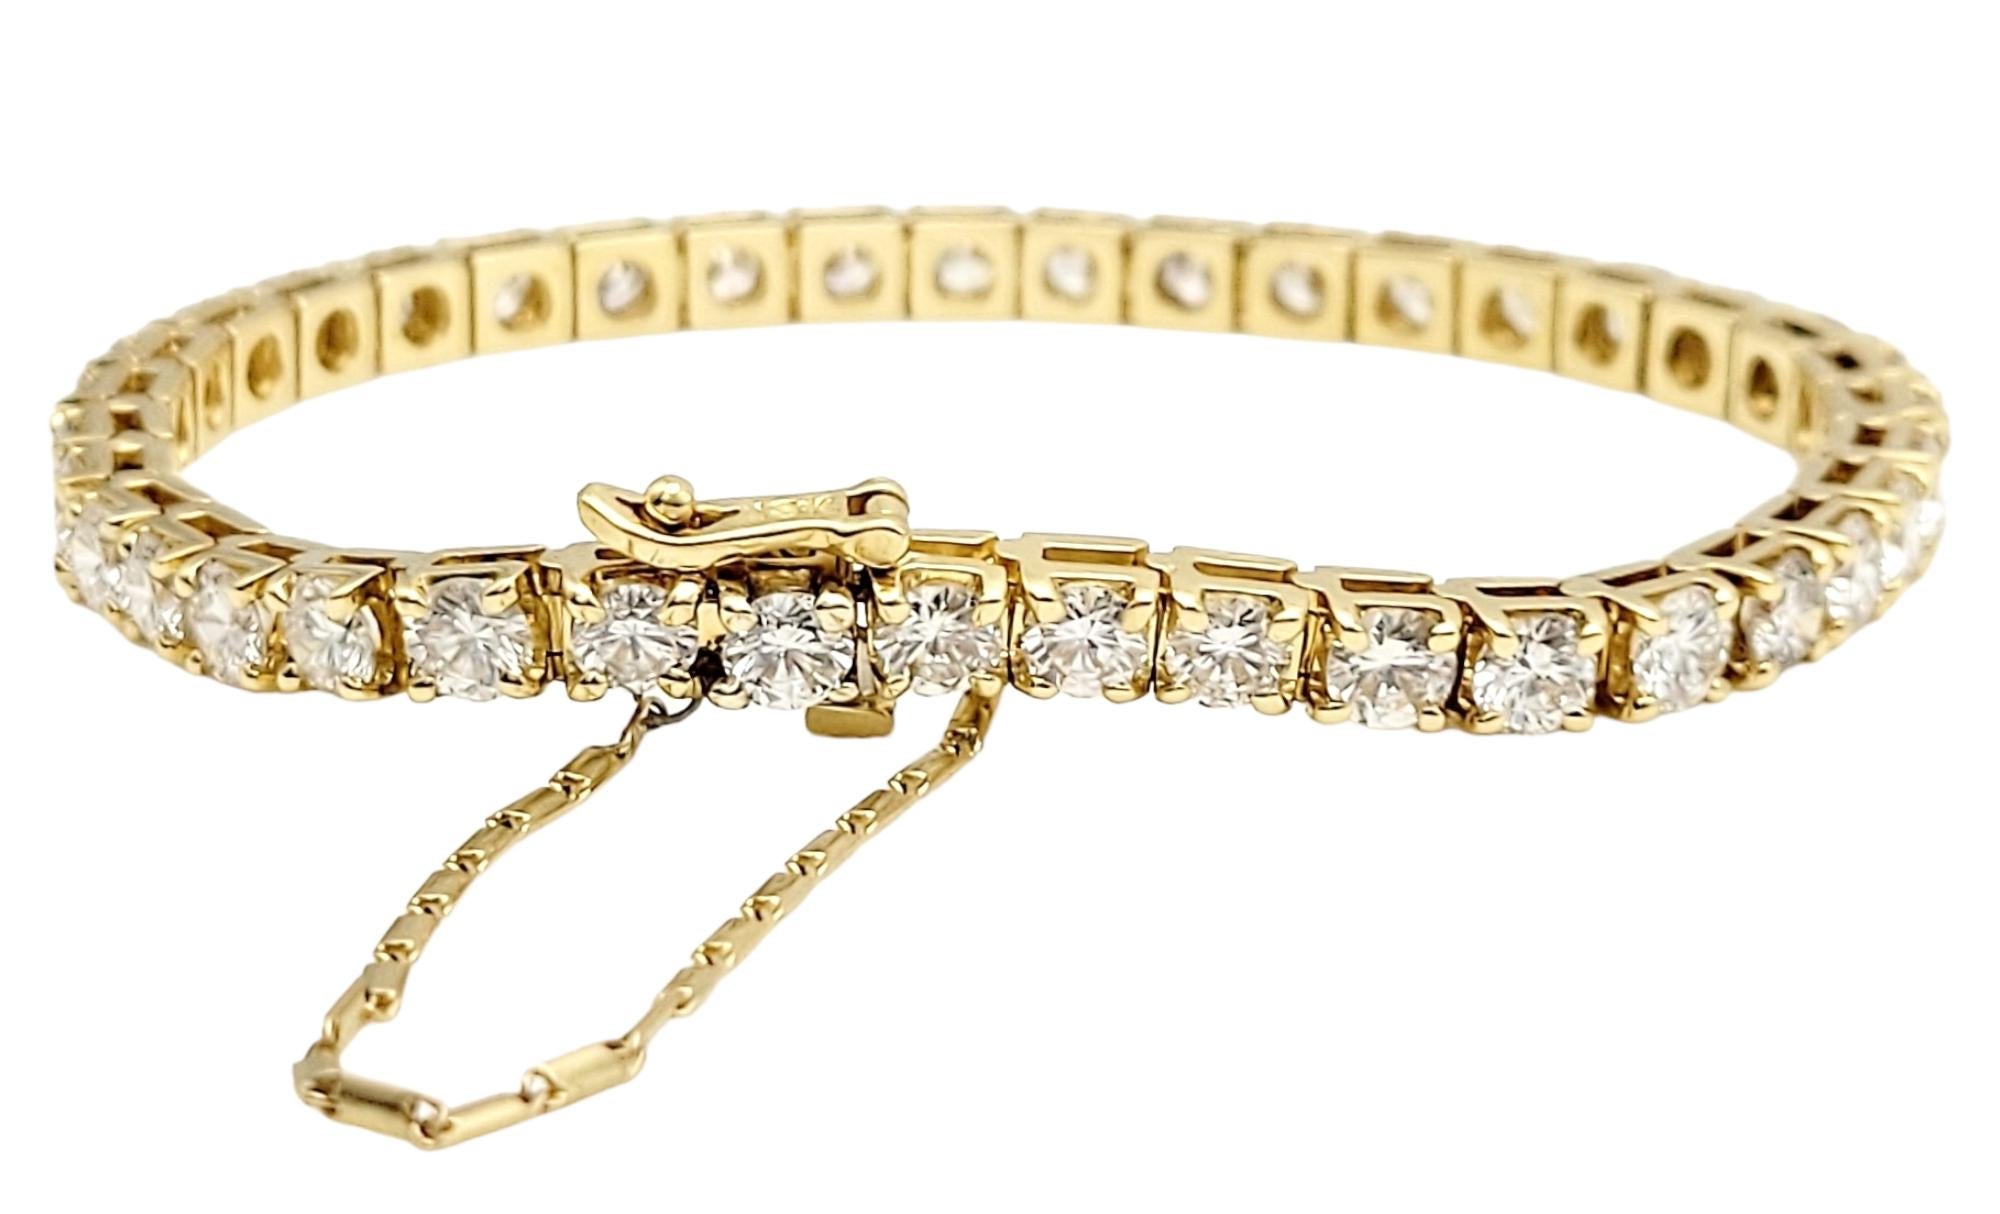 10 Carat Round Brilliant Cut Diamond Tennis Bracelet in 18 Karat Yellow Gold  In Good Condition For Sale In Scottsdale, AZ